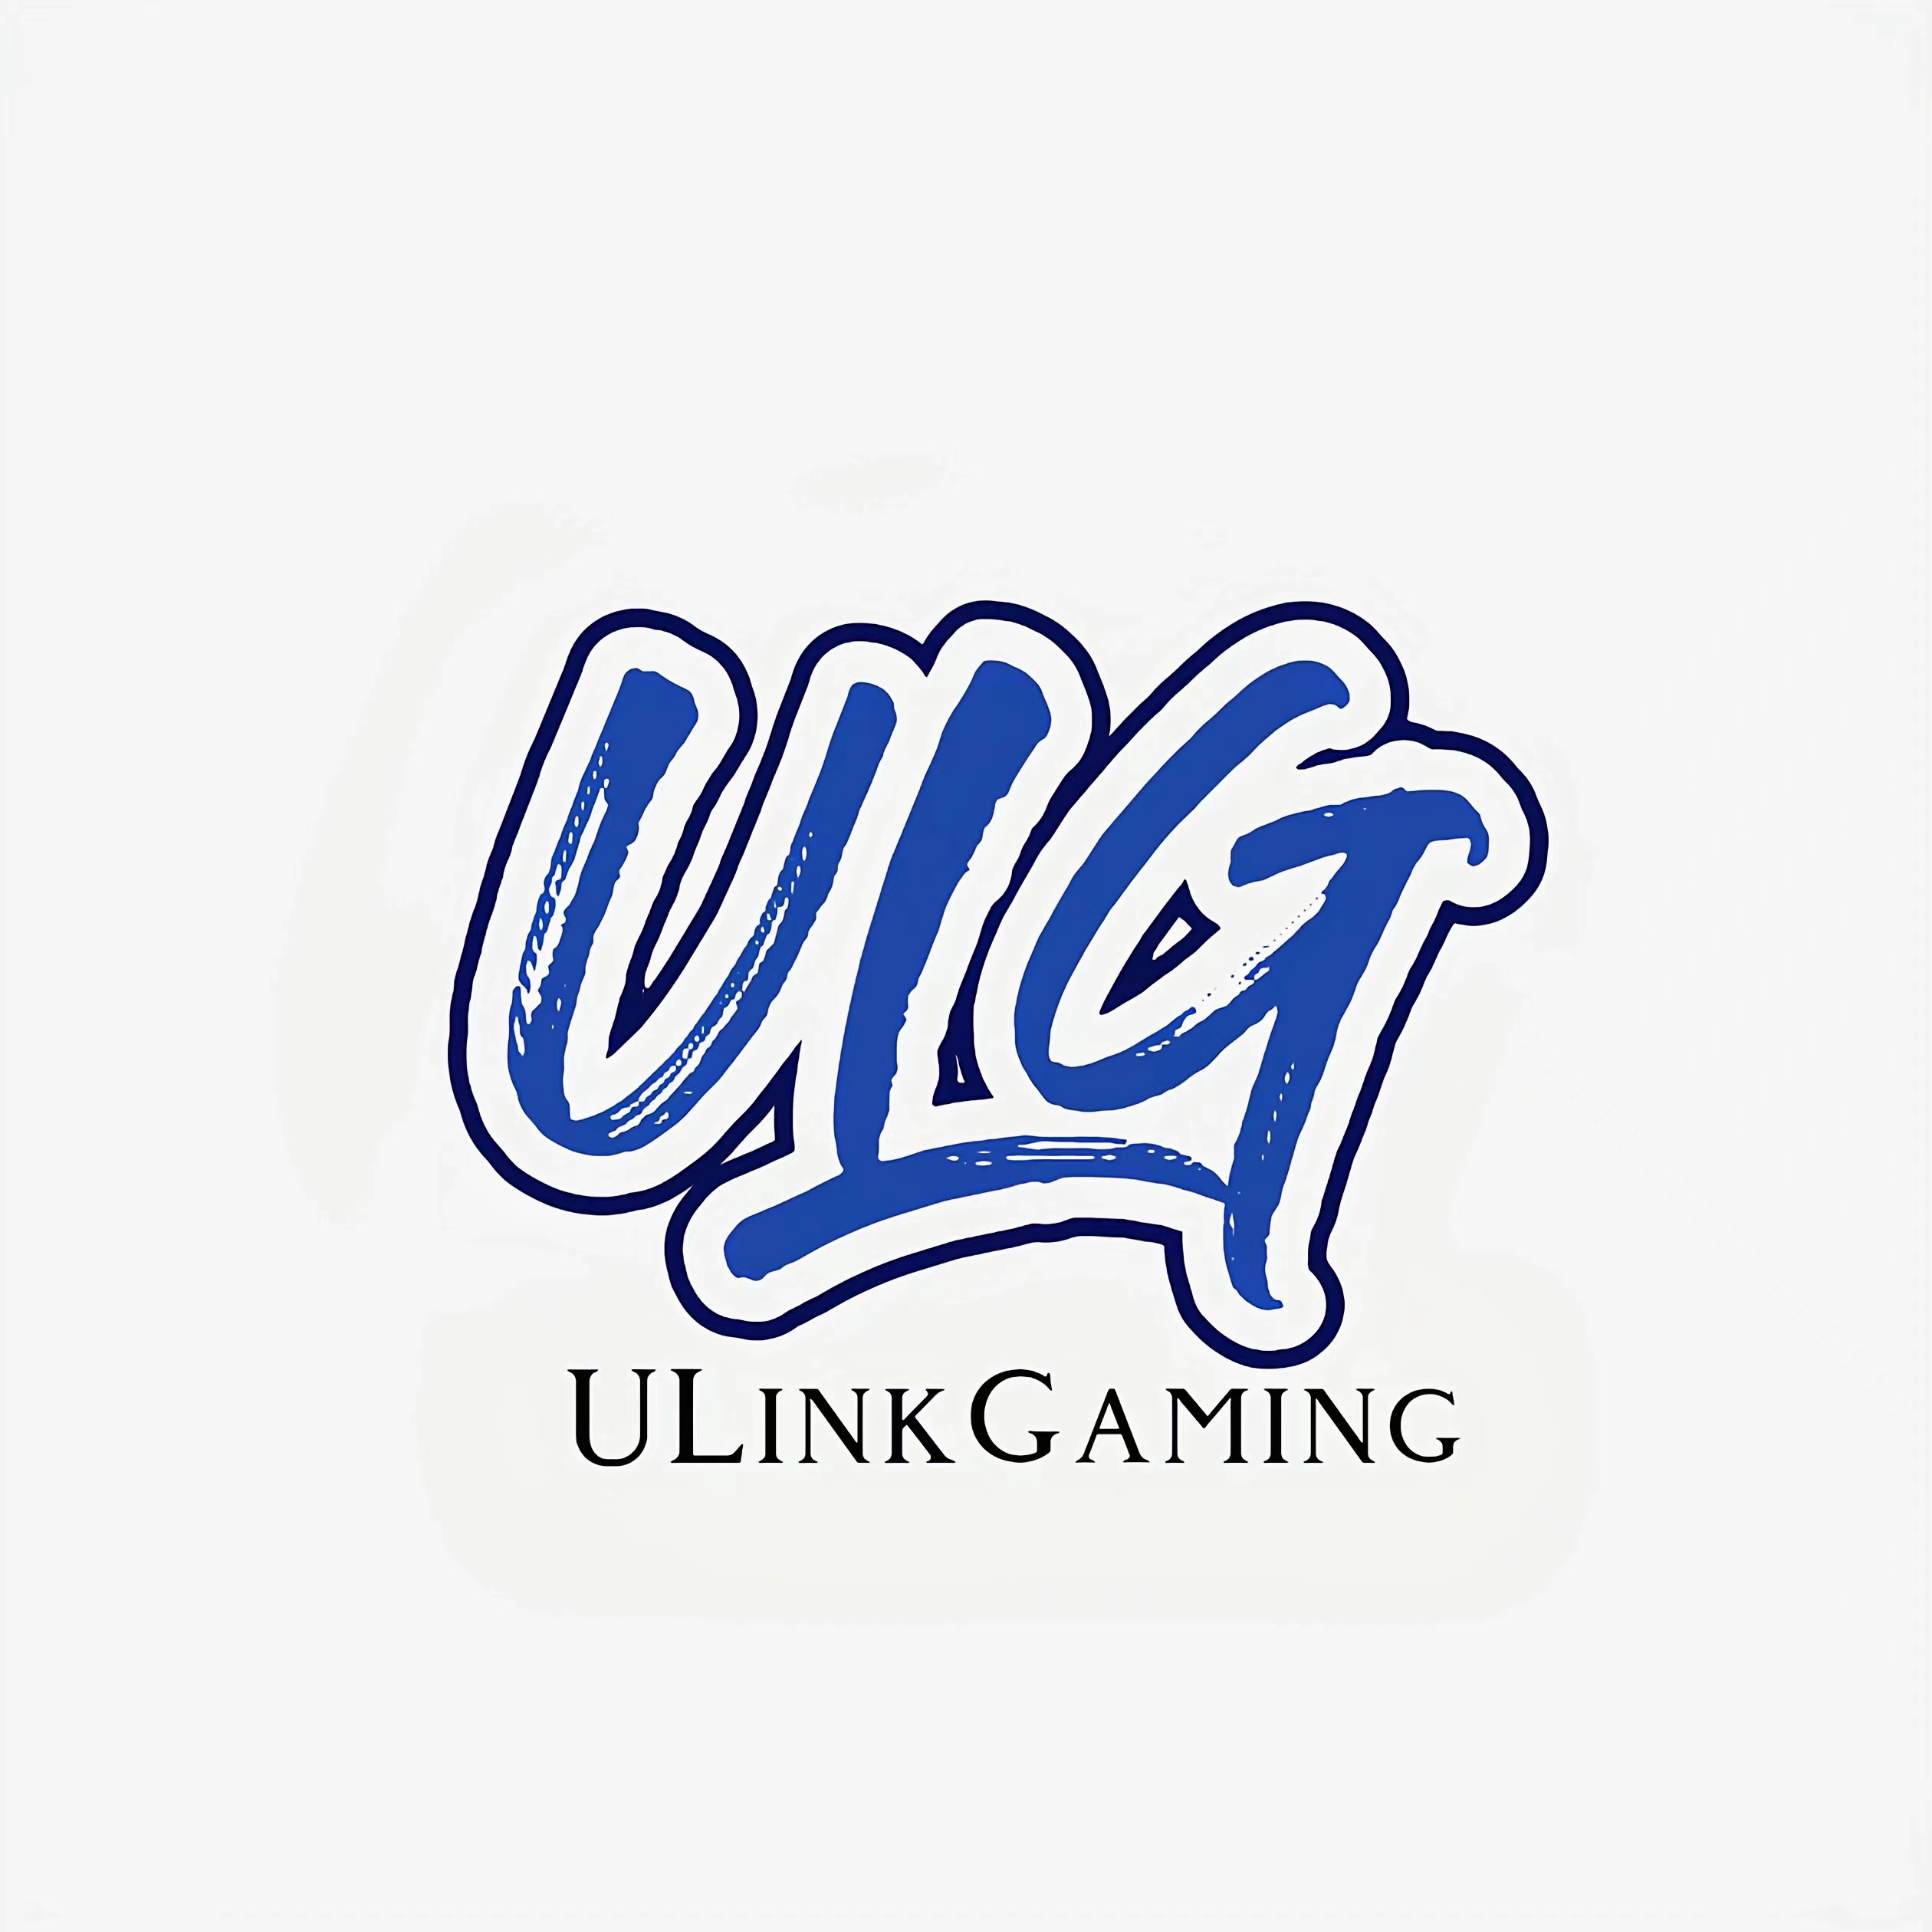 ULinkGaming